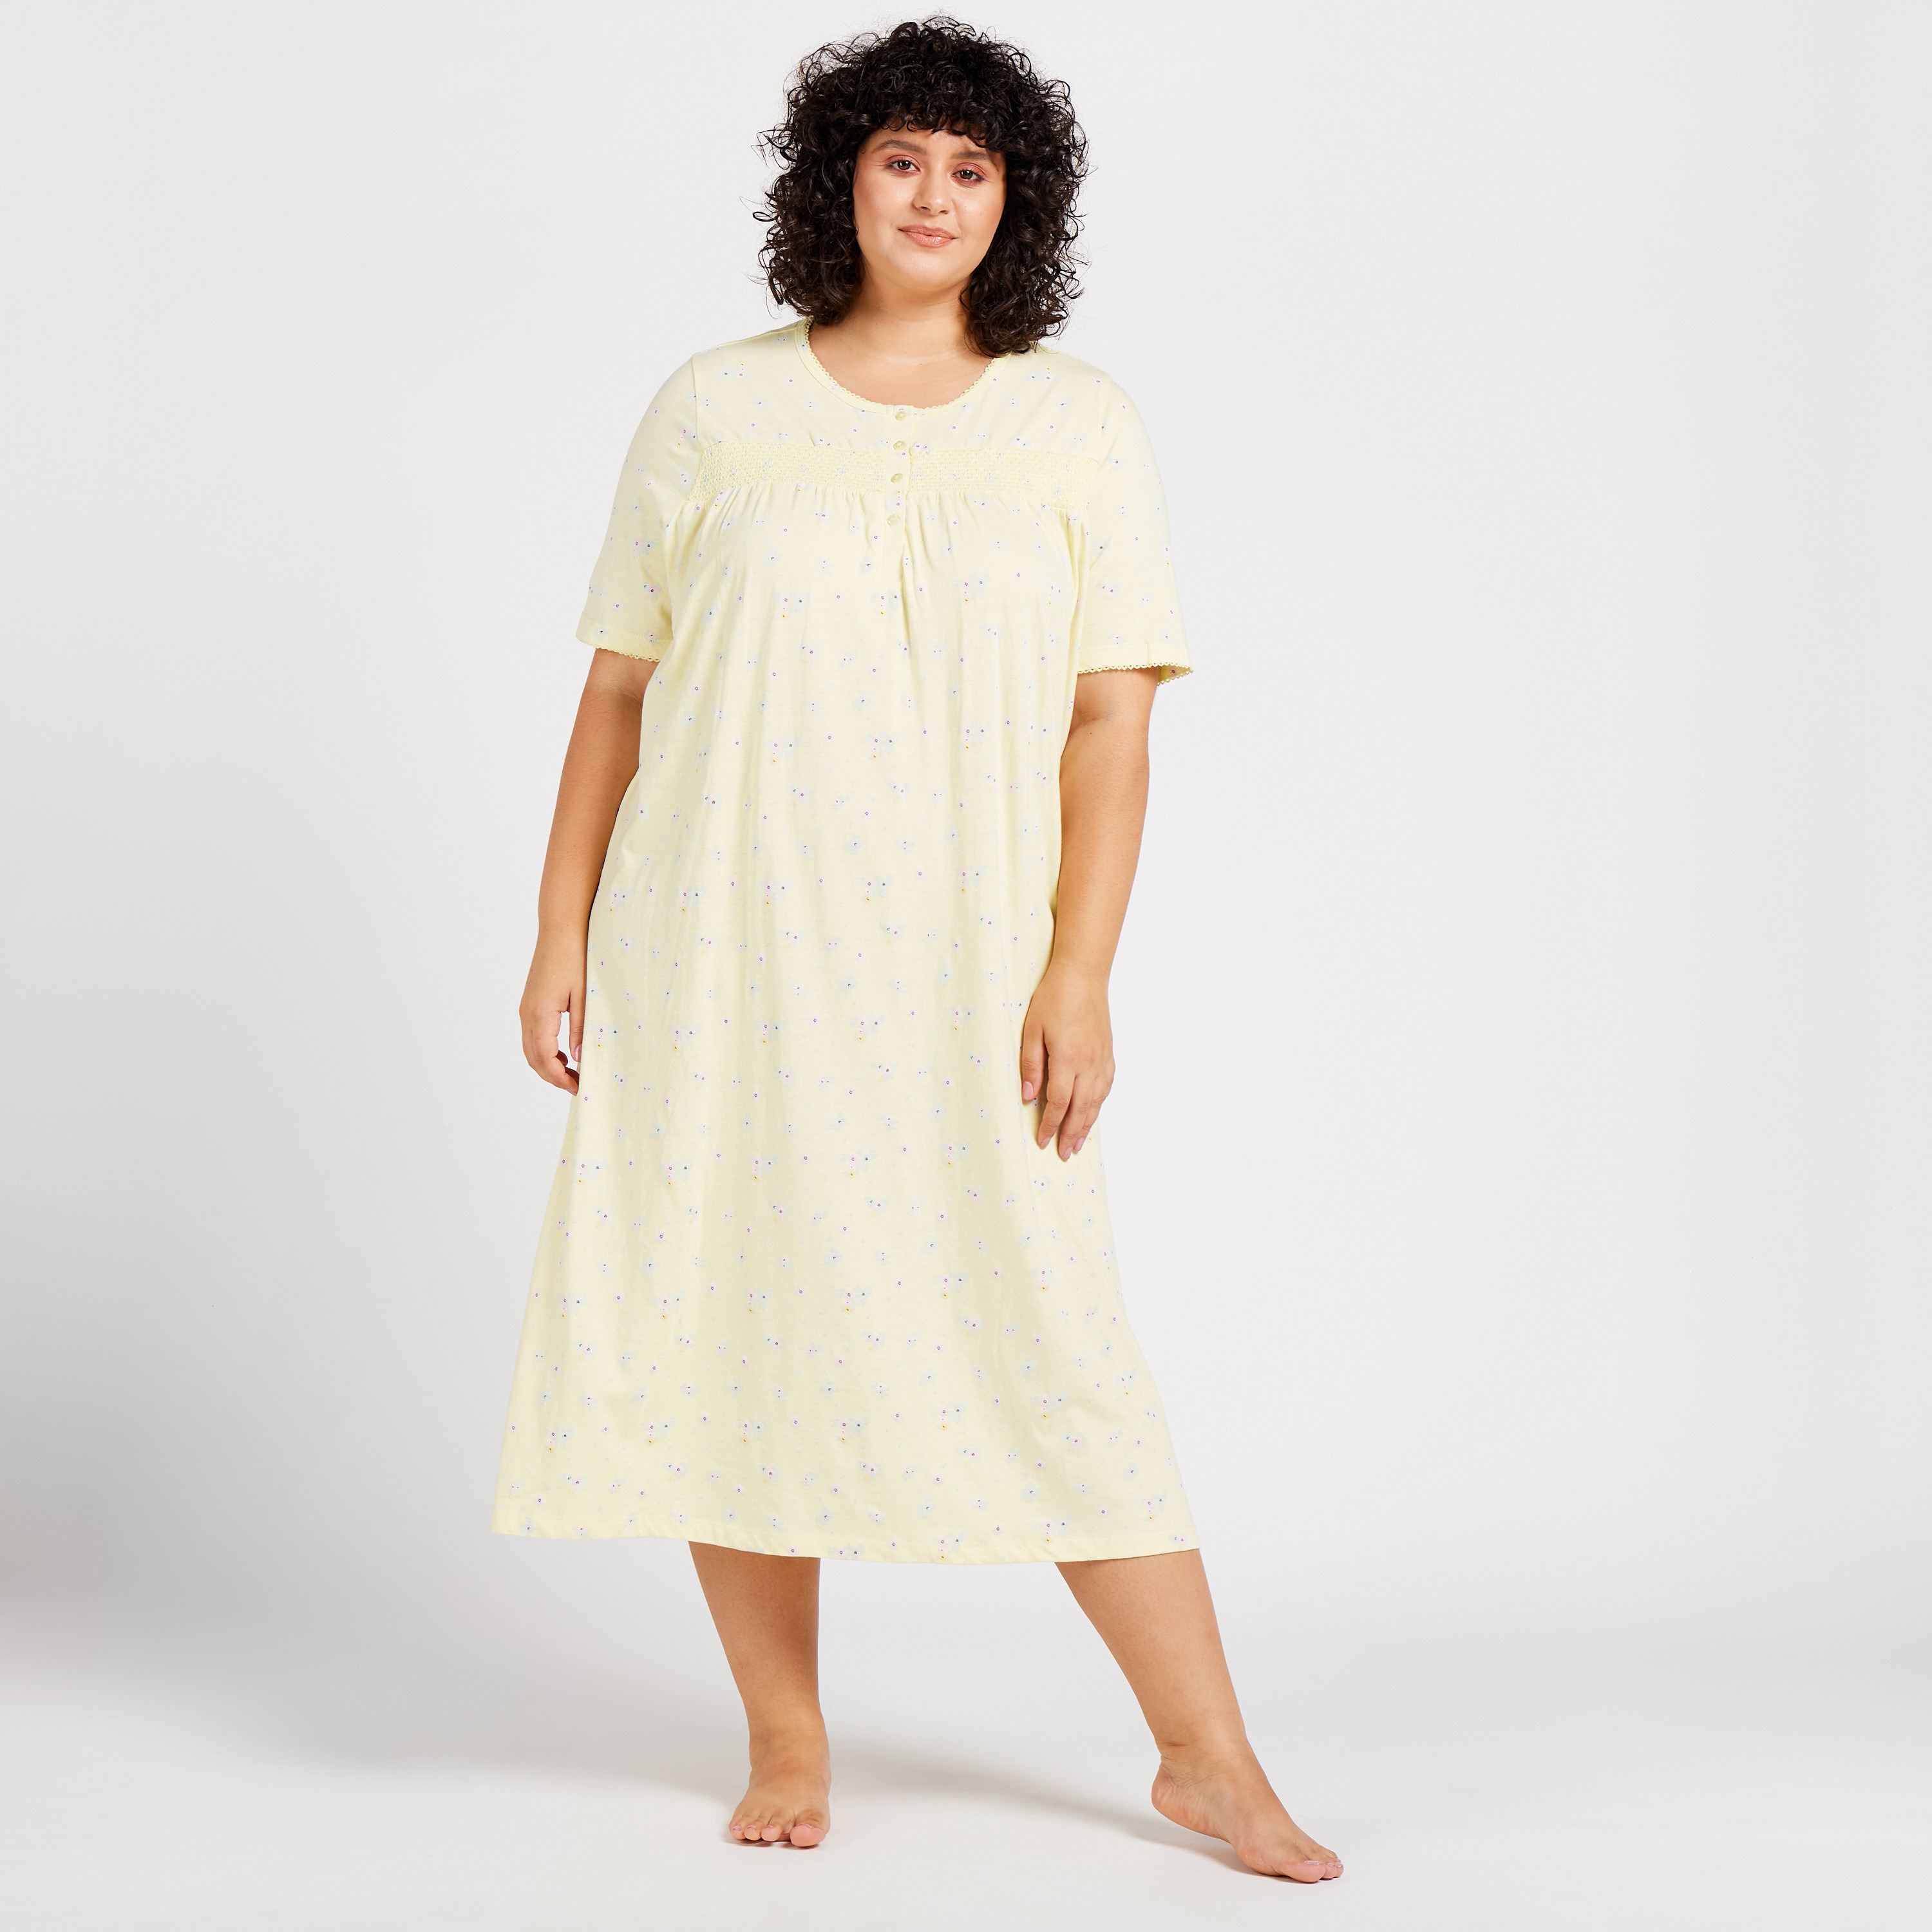 Summer Elegant Cotton Nursing Sleepwear For Plus Size Women: Sexy Spaghetti  Strap Nightgown, Sleepshirt, And Night Dress From Beijingtop1, $11.21 |  DHgate.Com